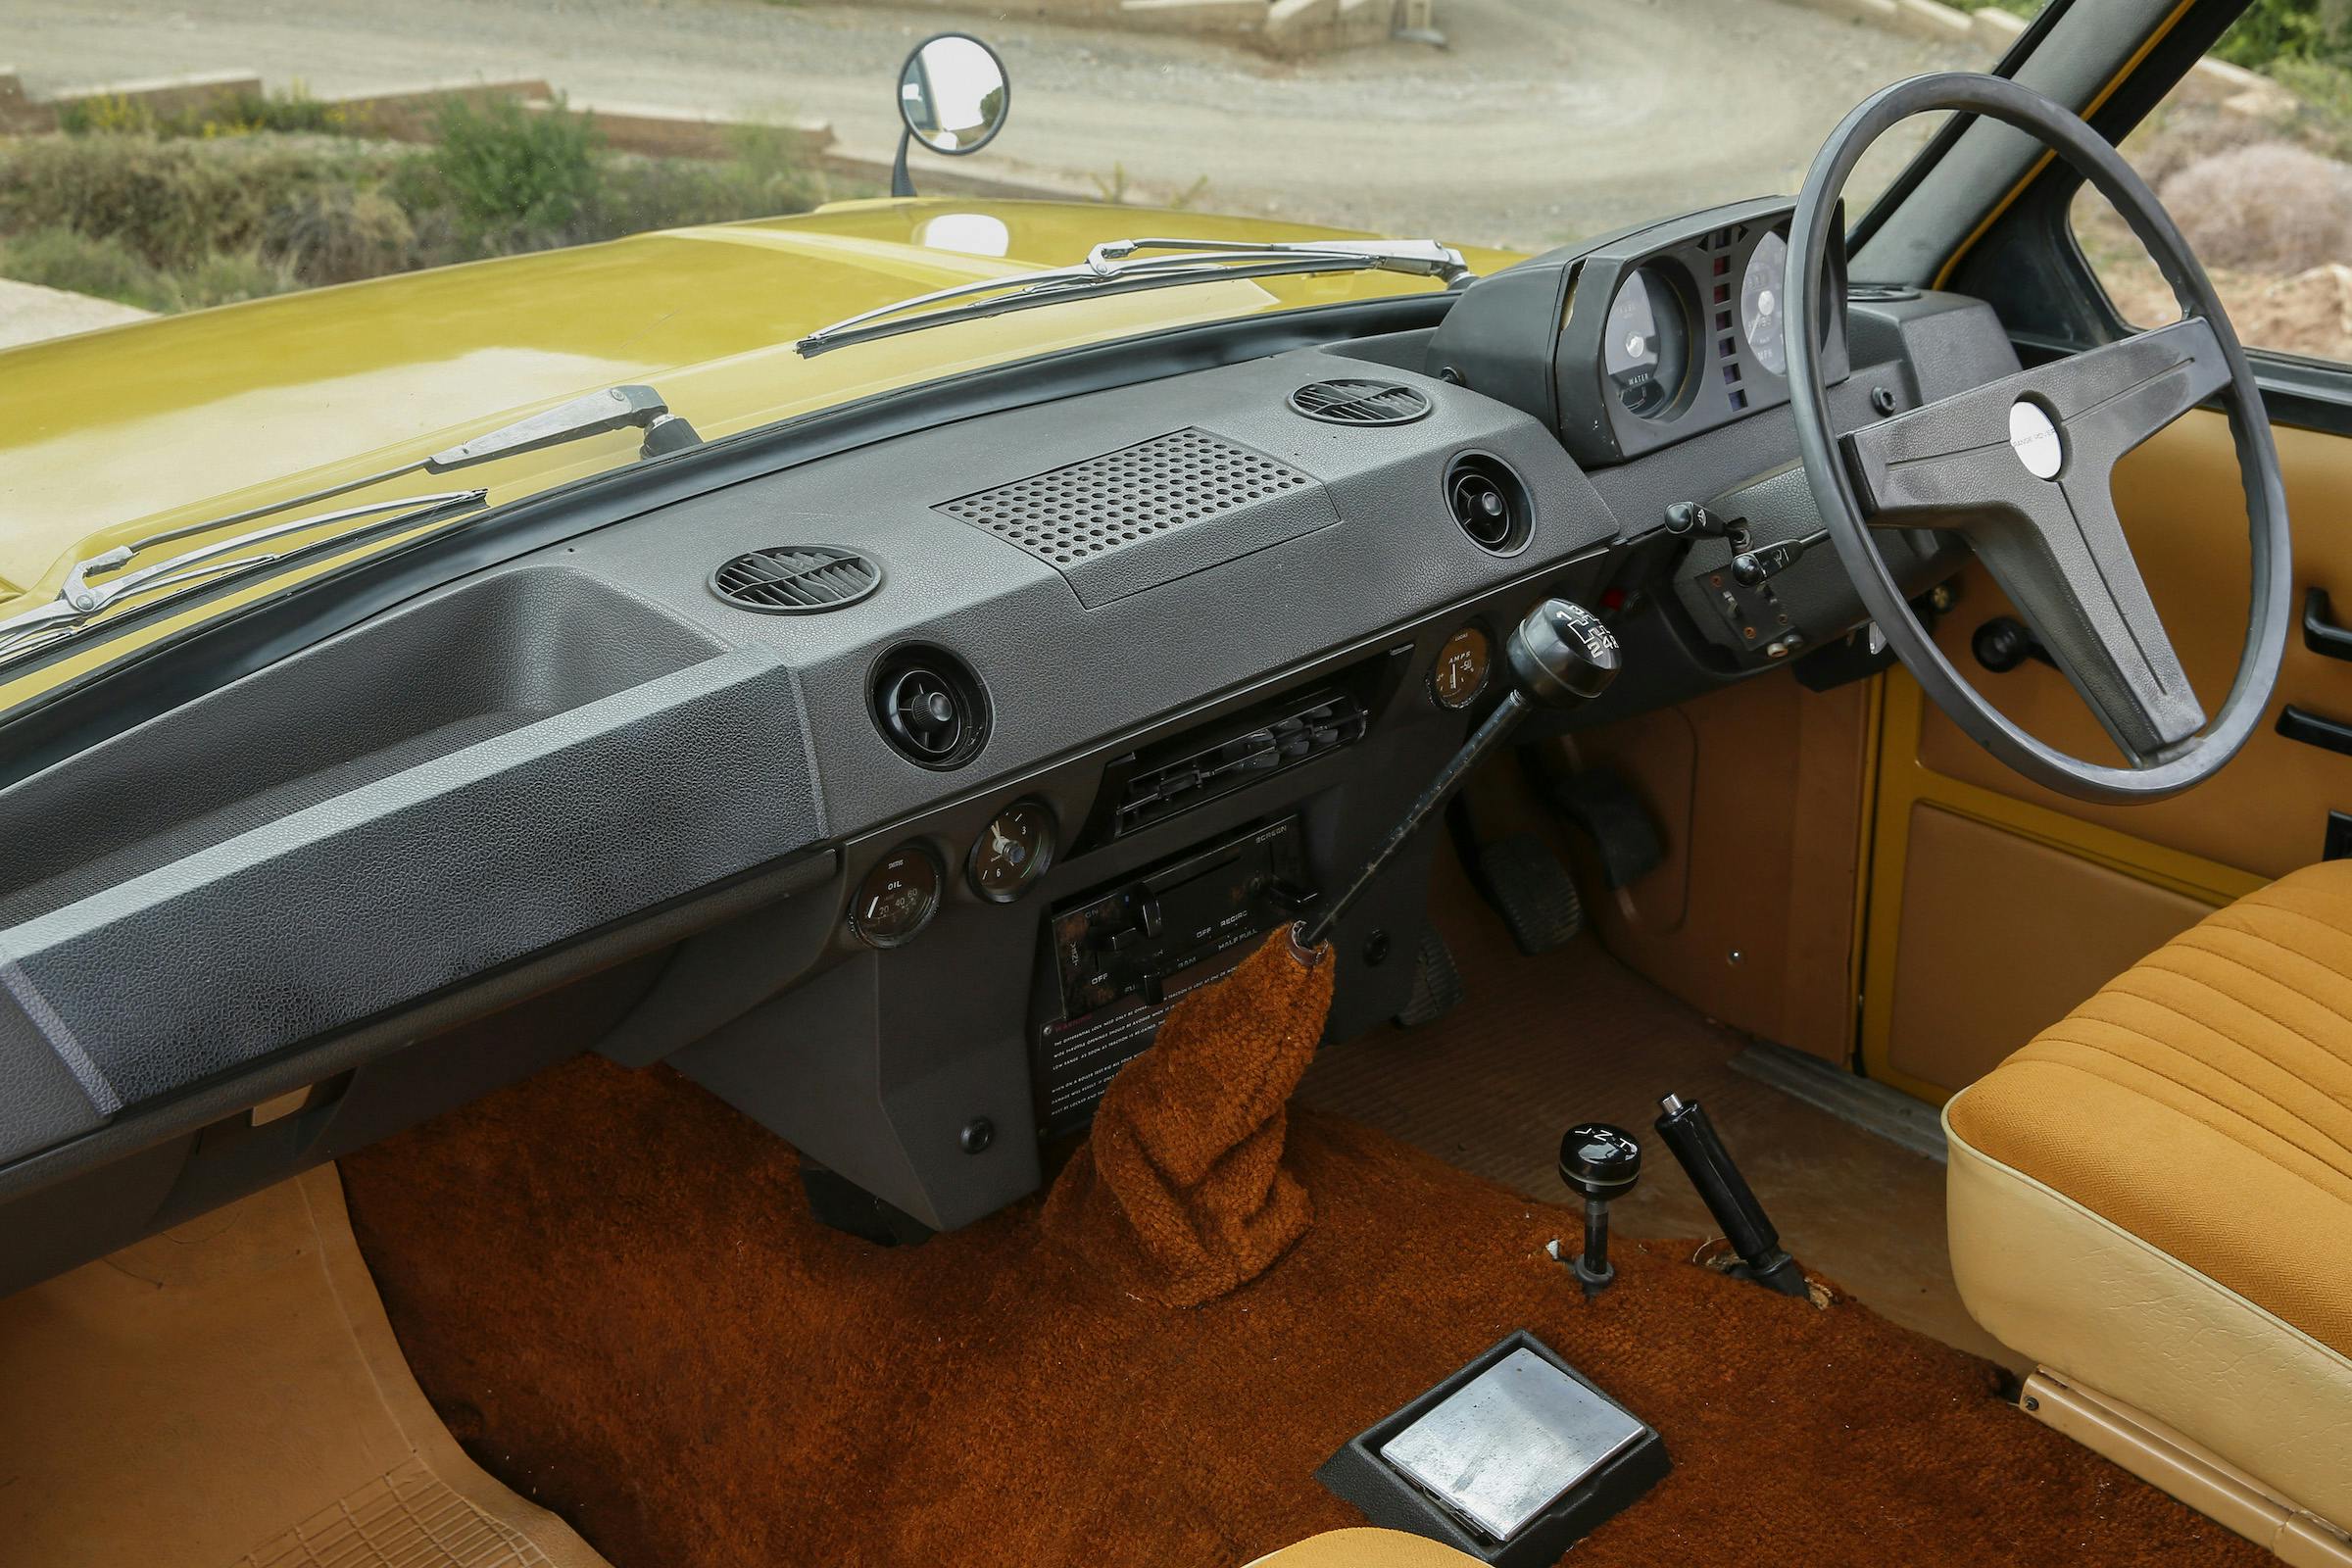 Sloane Range Rover interior